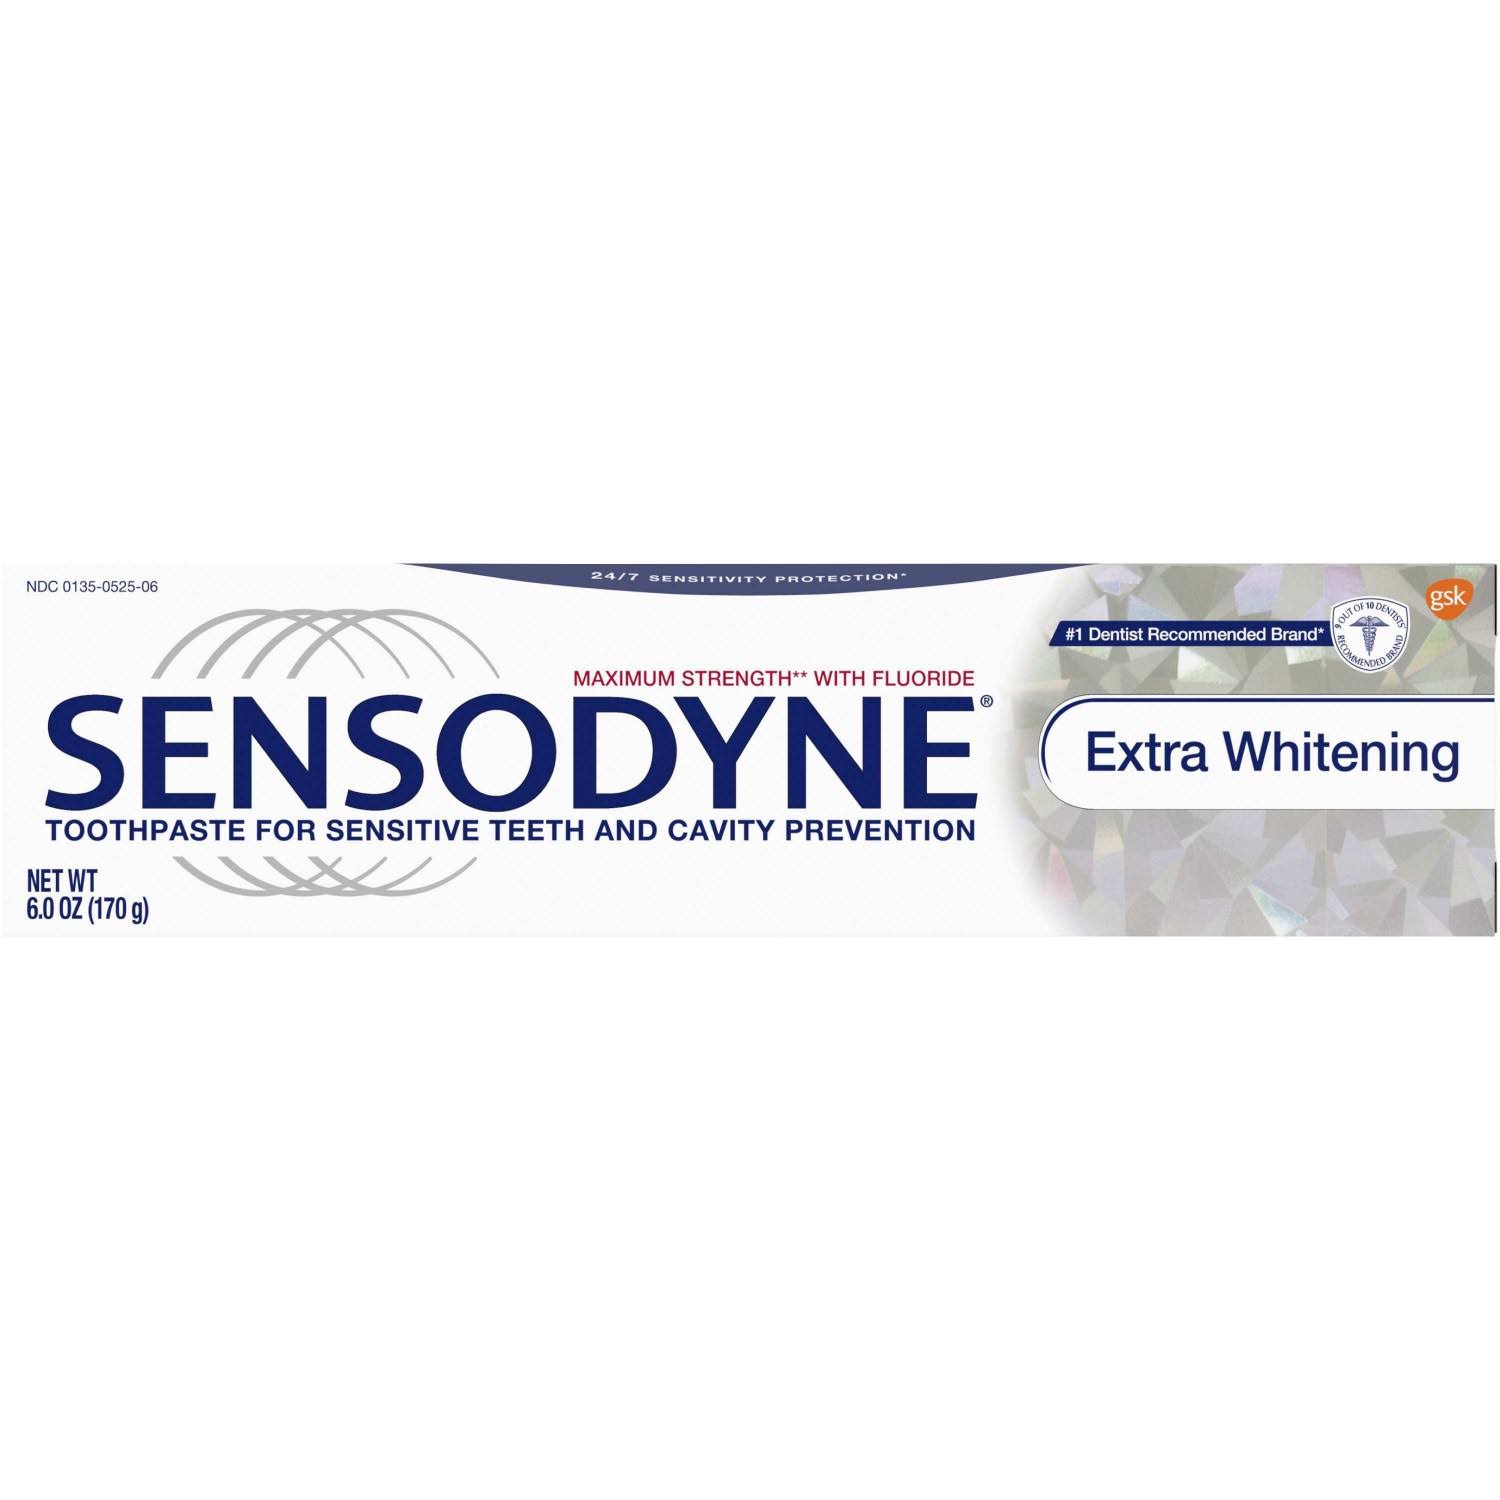 Sensodyne Maximum Strength and Extra Whitening Toothpaste - 190ml